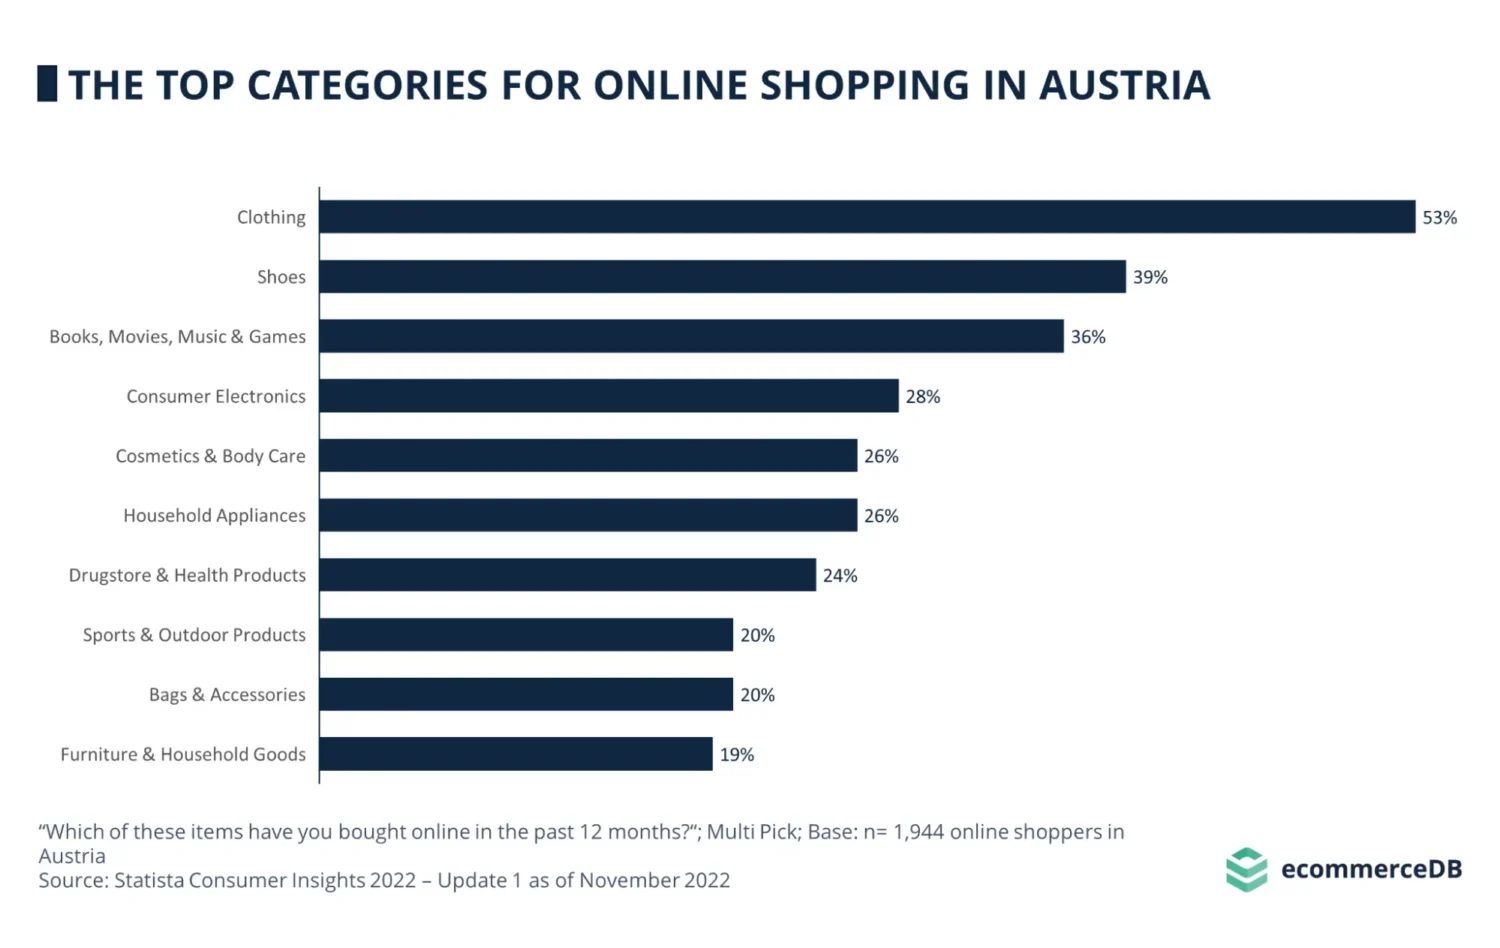 Top e-commerce categories in Austria according to ECDB